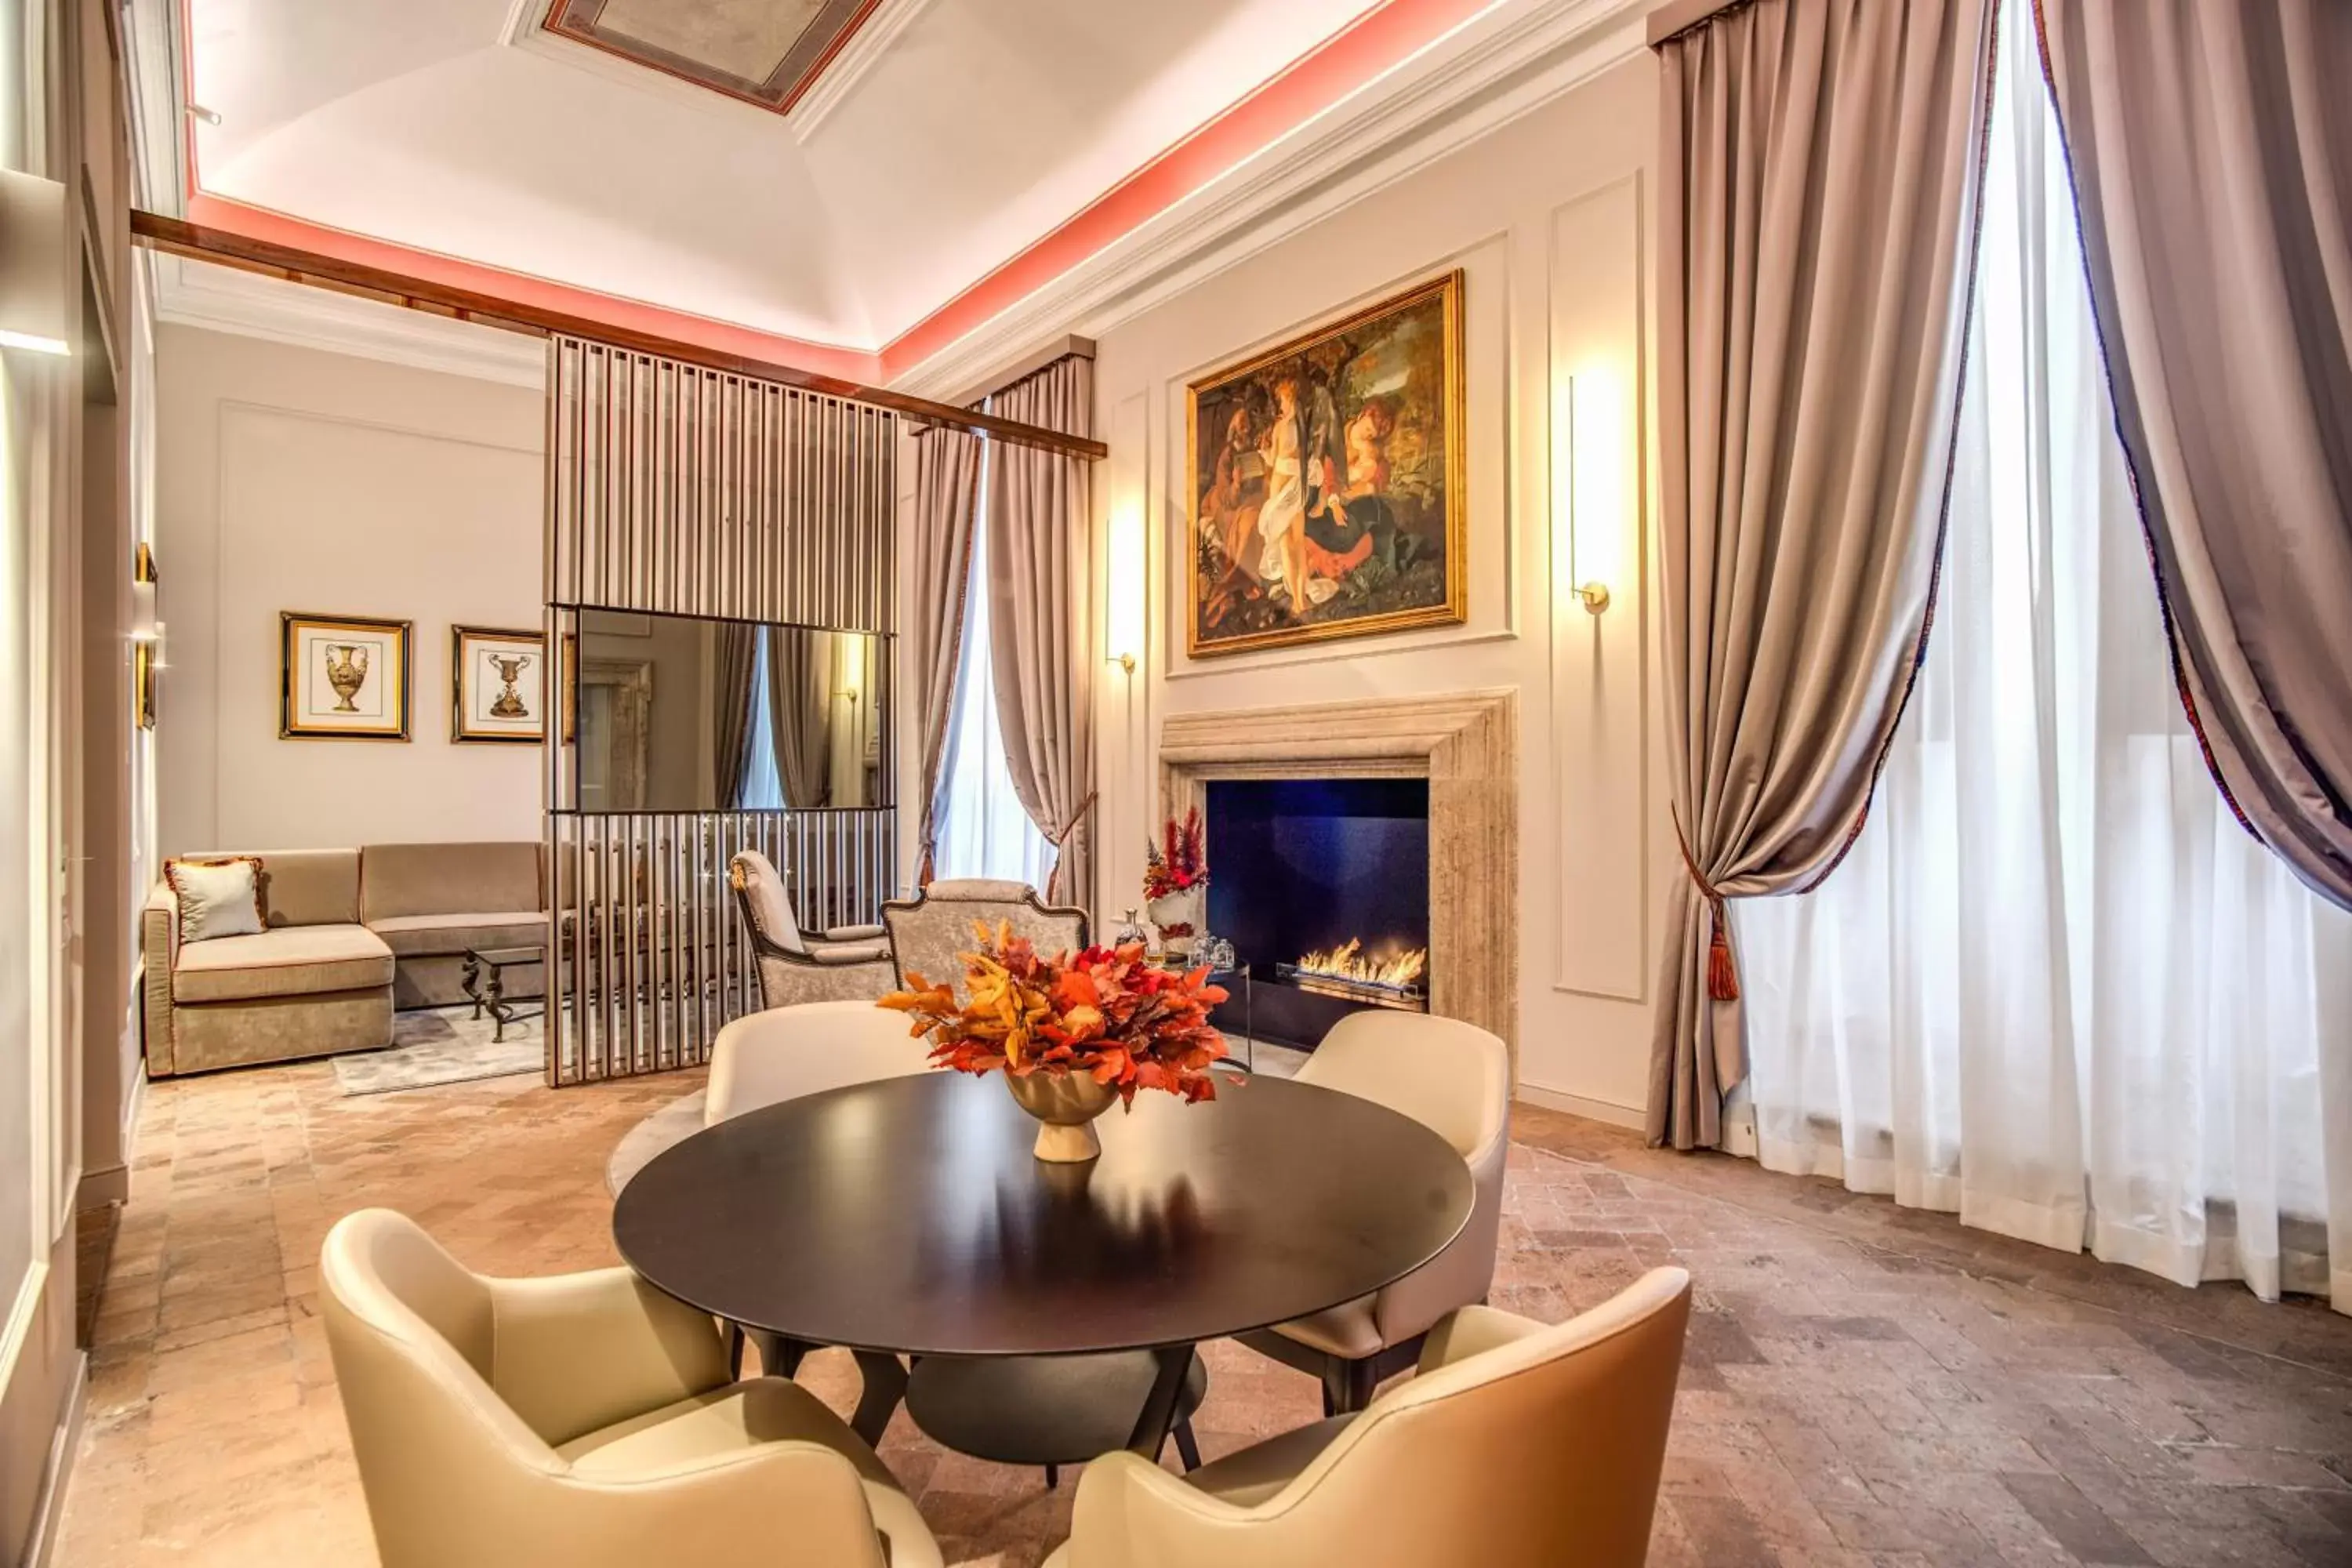 Photo of the whole room, Dining Area in Eitch Borromini Palazzo Pamphilj